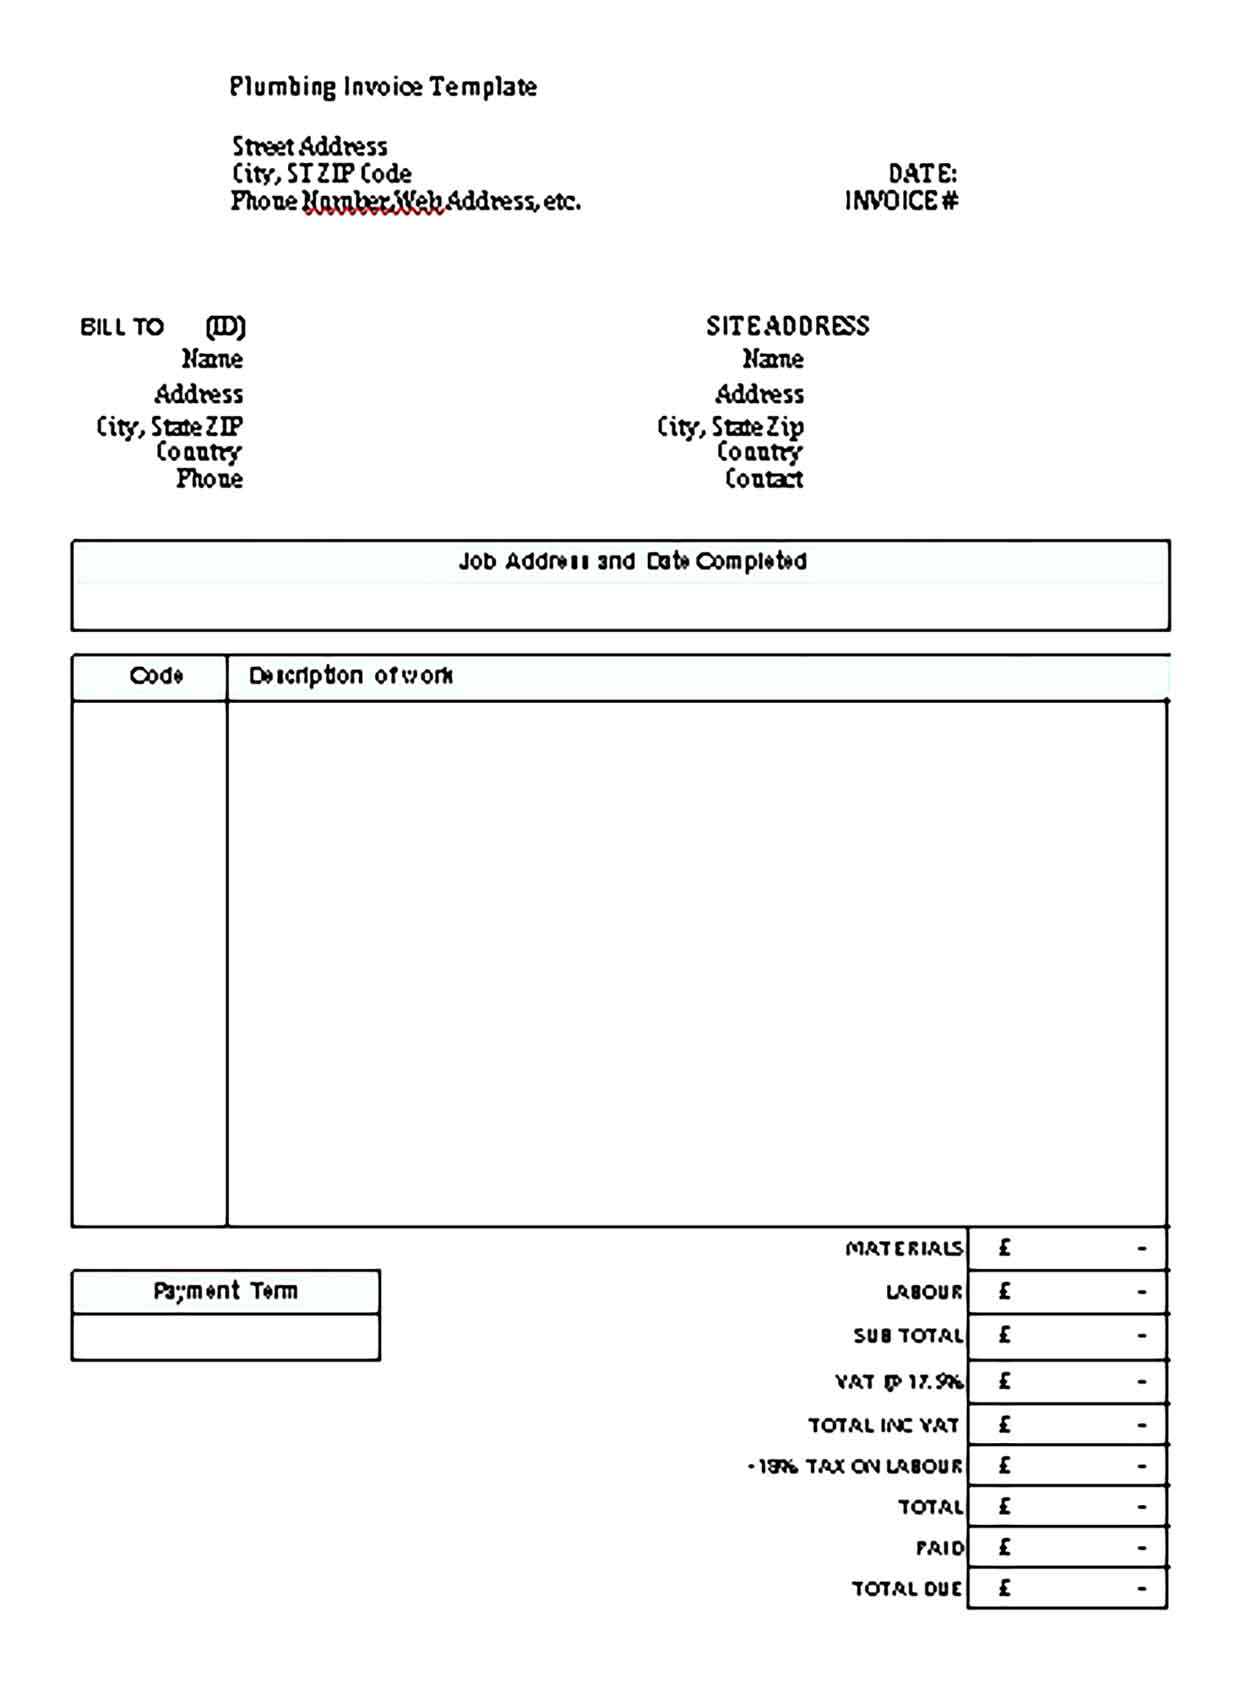 Sample Templates plumbing invoice format